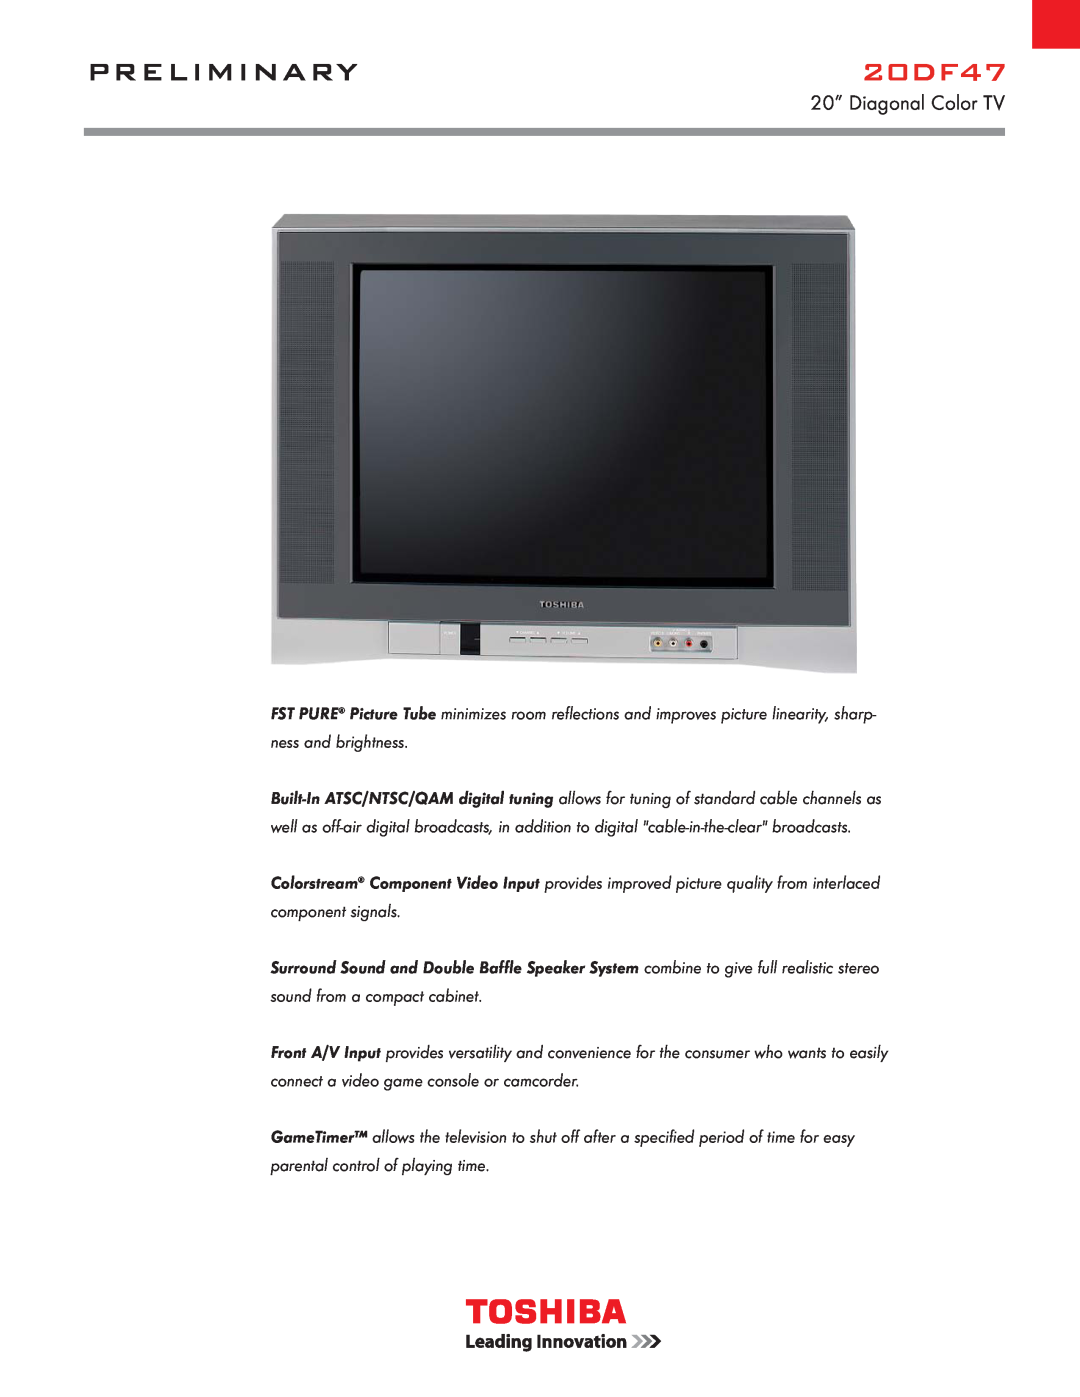 Toshiba 20DF47 manual Preliminary, 20” Diagonal Color TV 